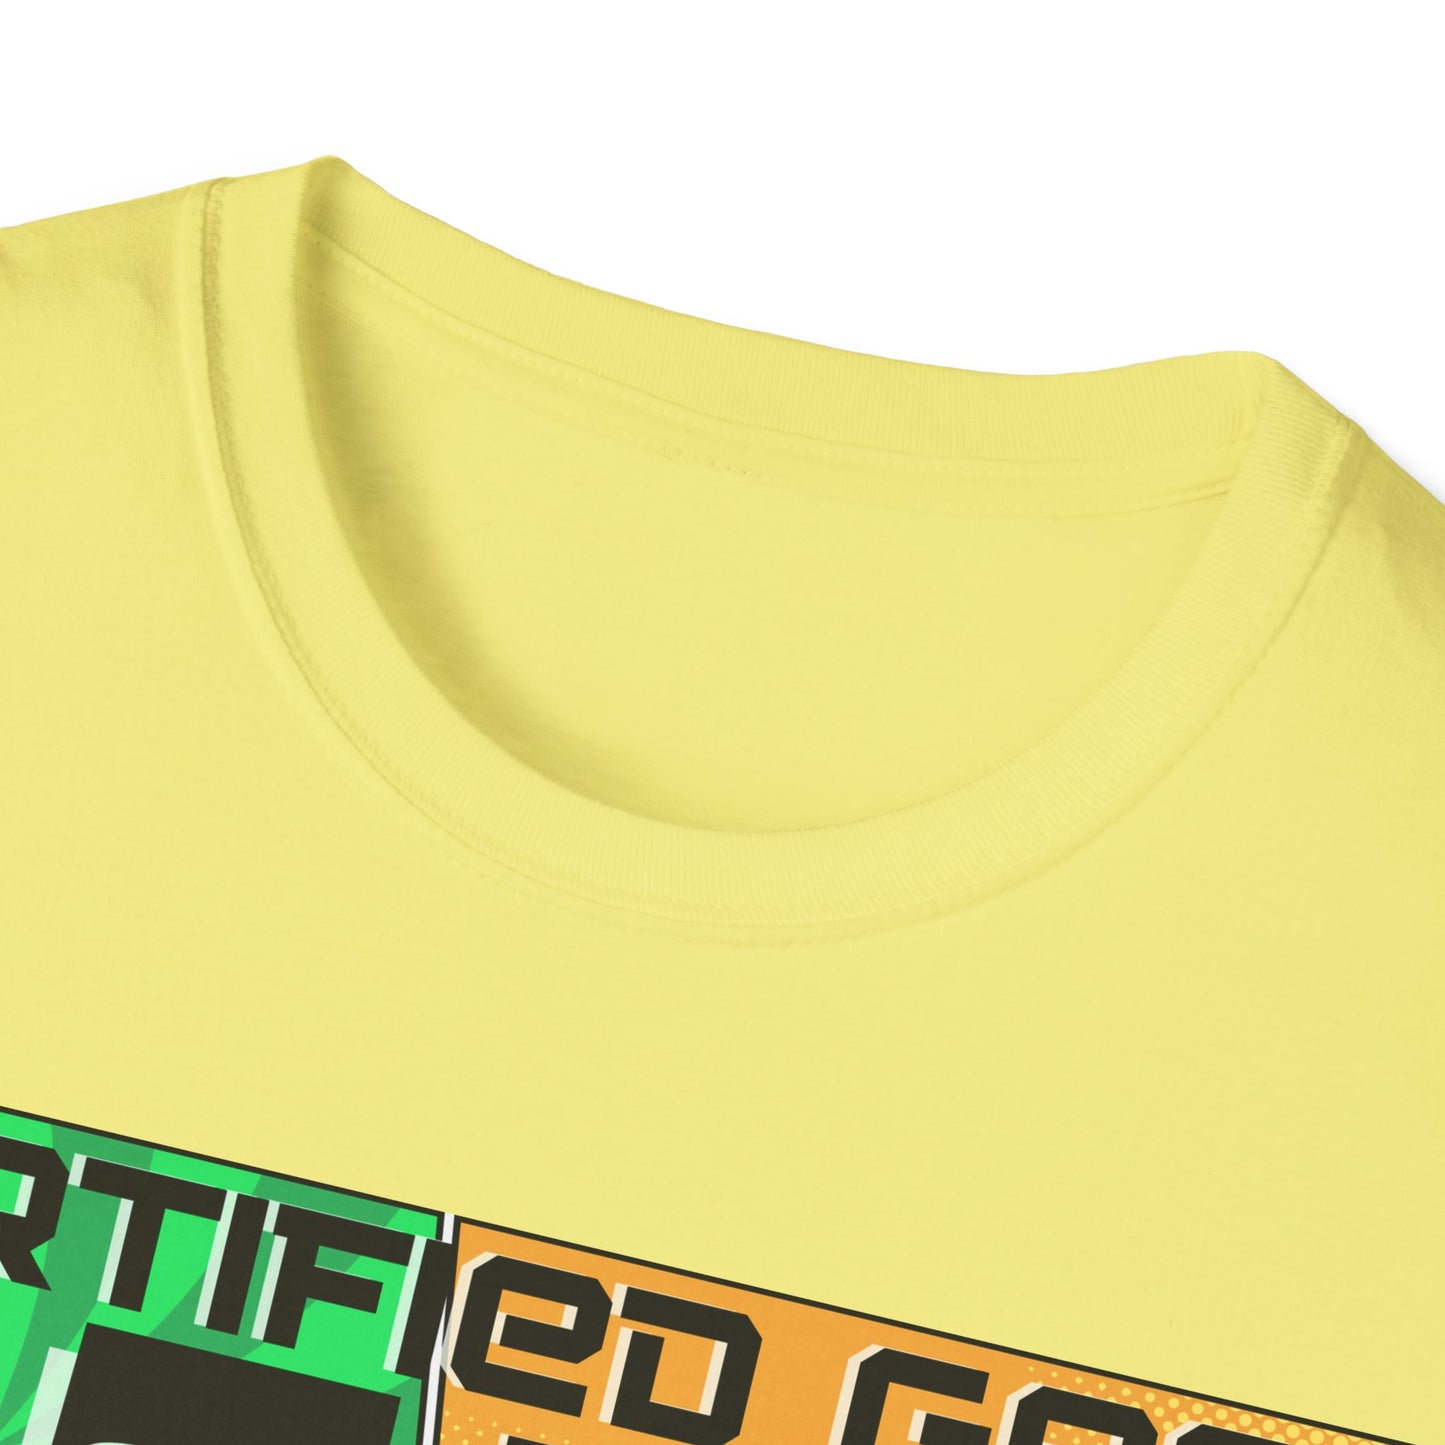 Certified Geek WAP Comic Unisex Softstyle T-Shirt